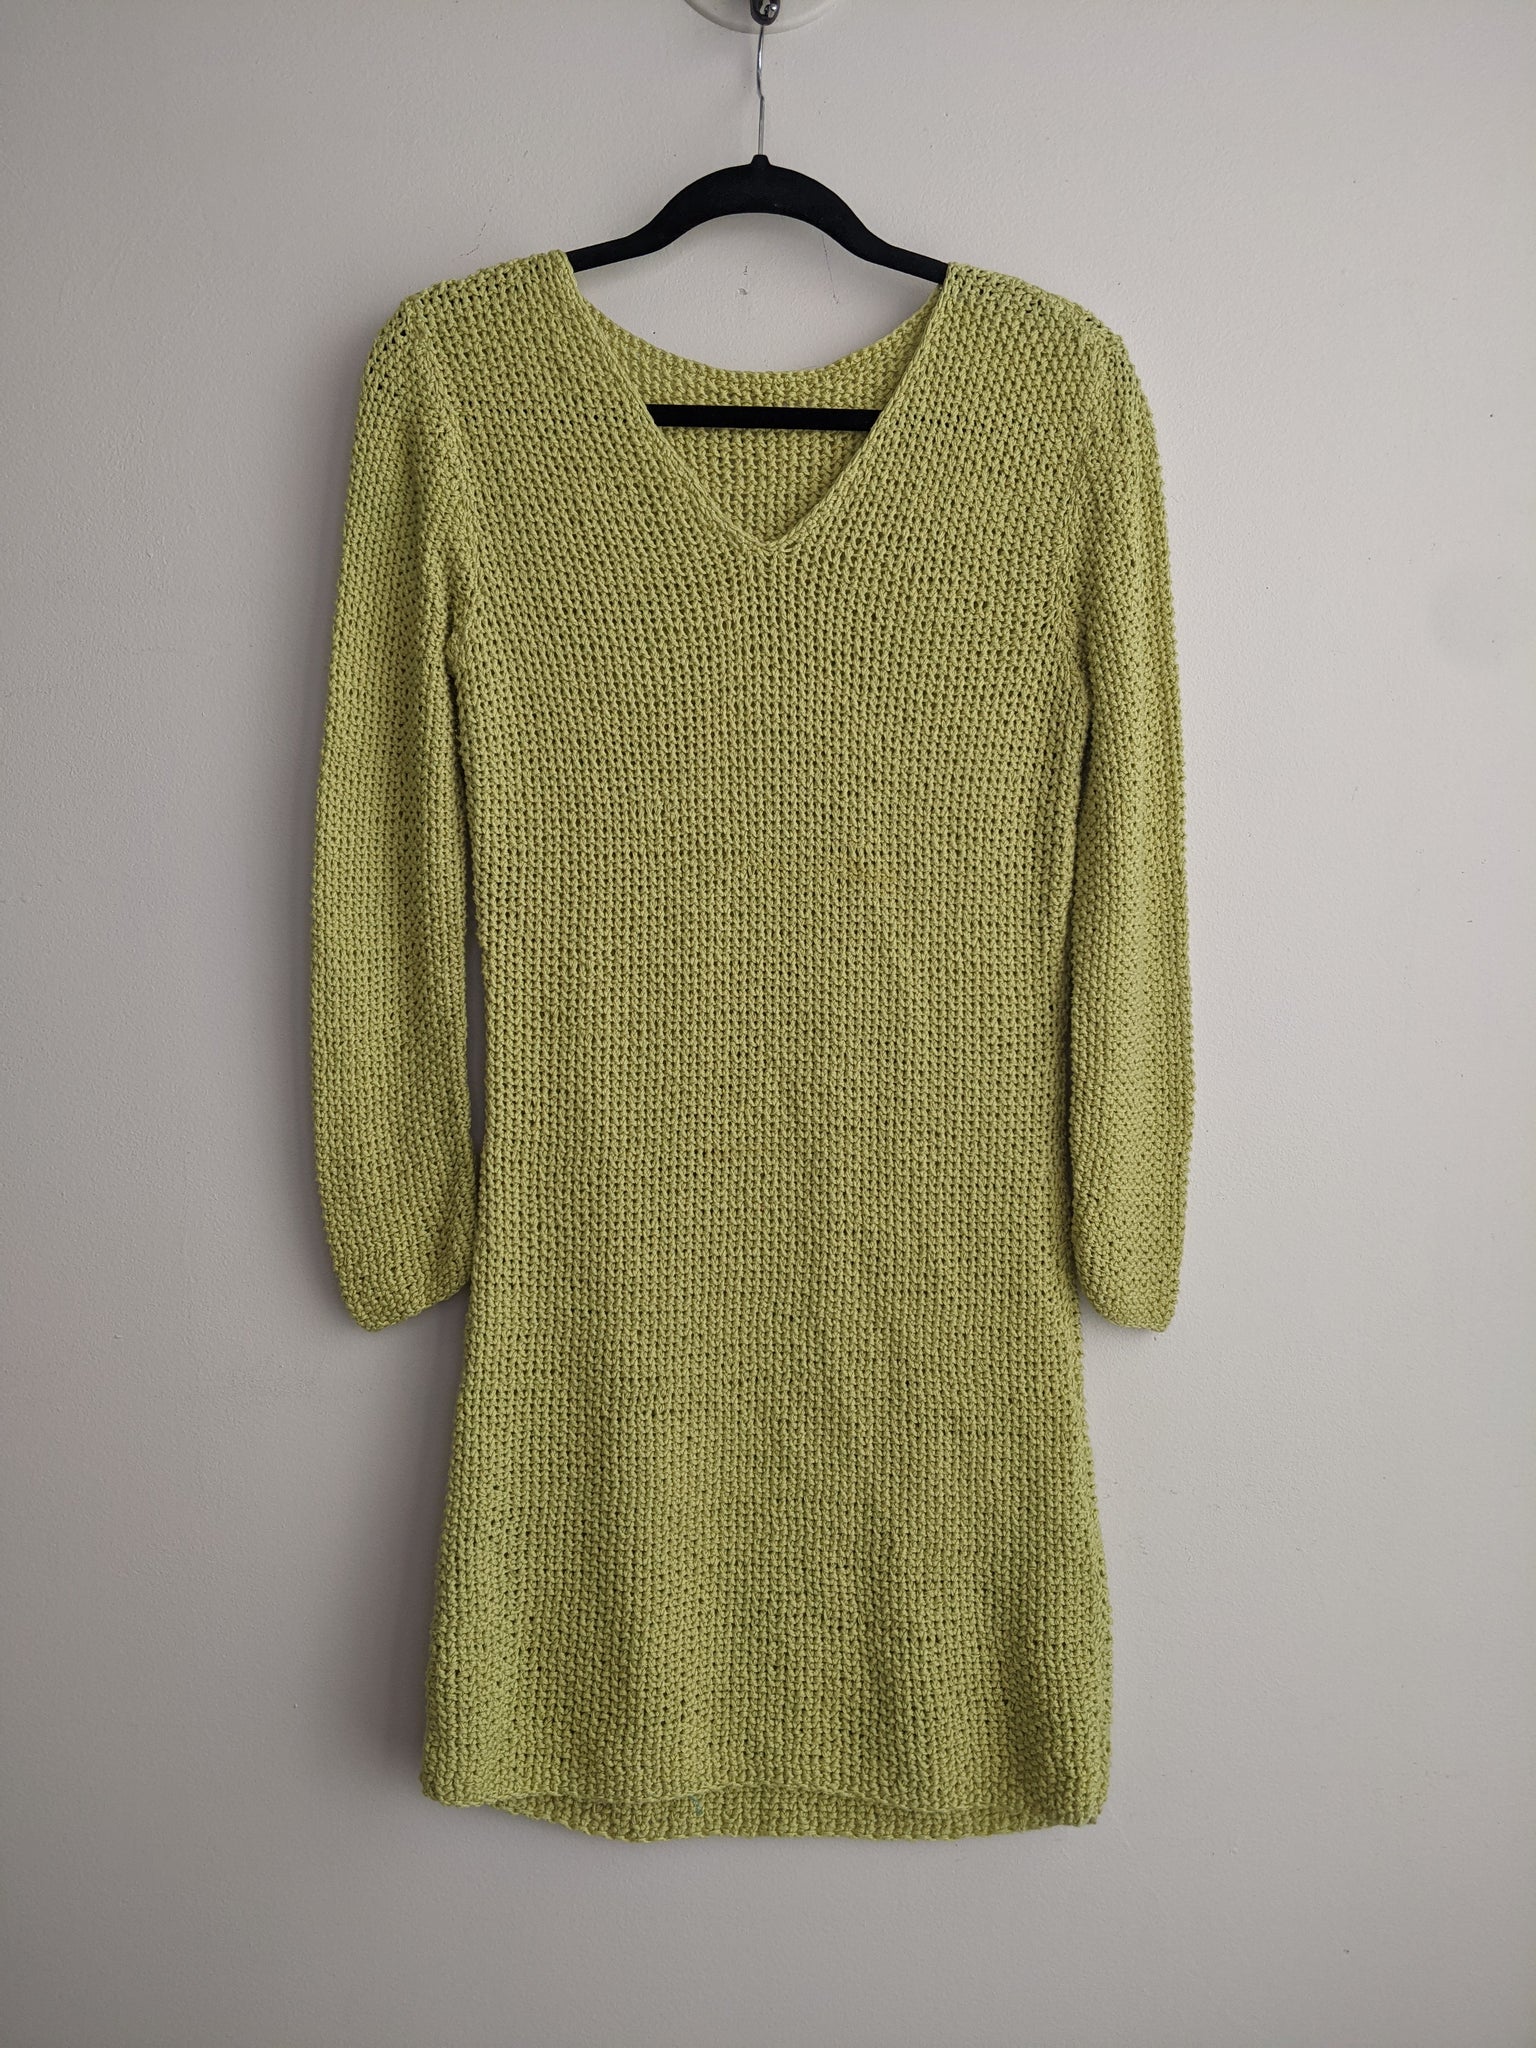 Avocado Green Knit Dress